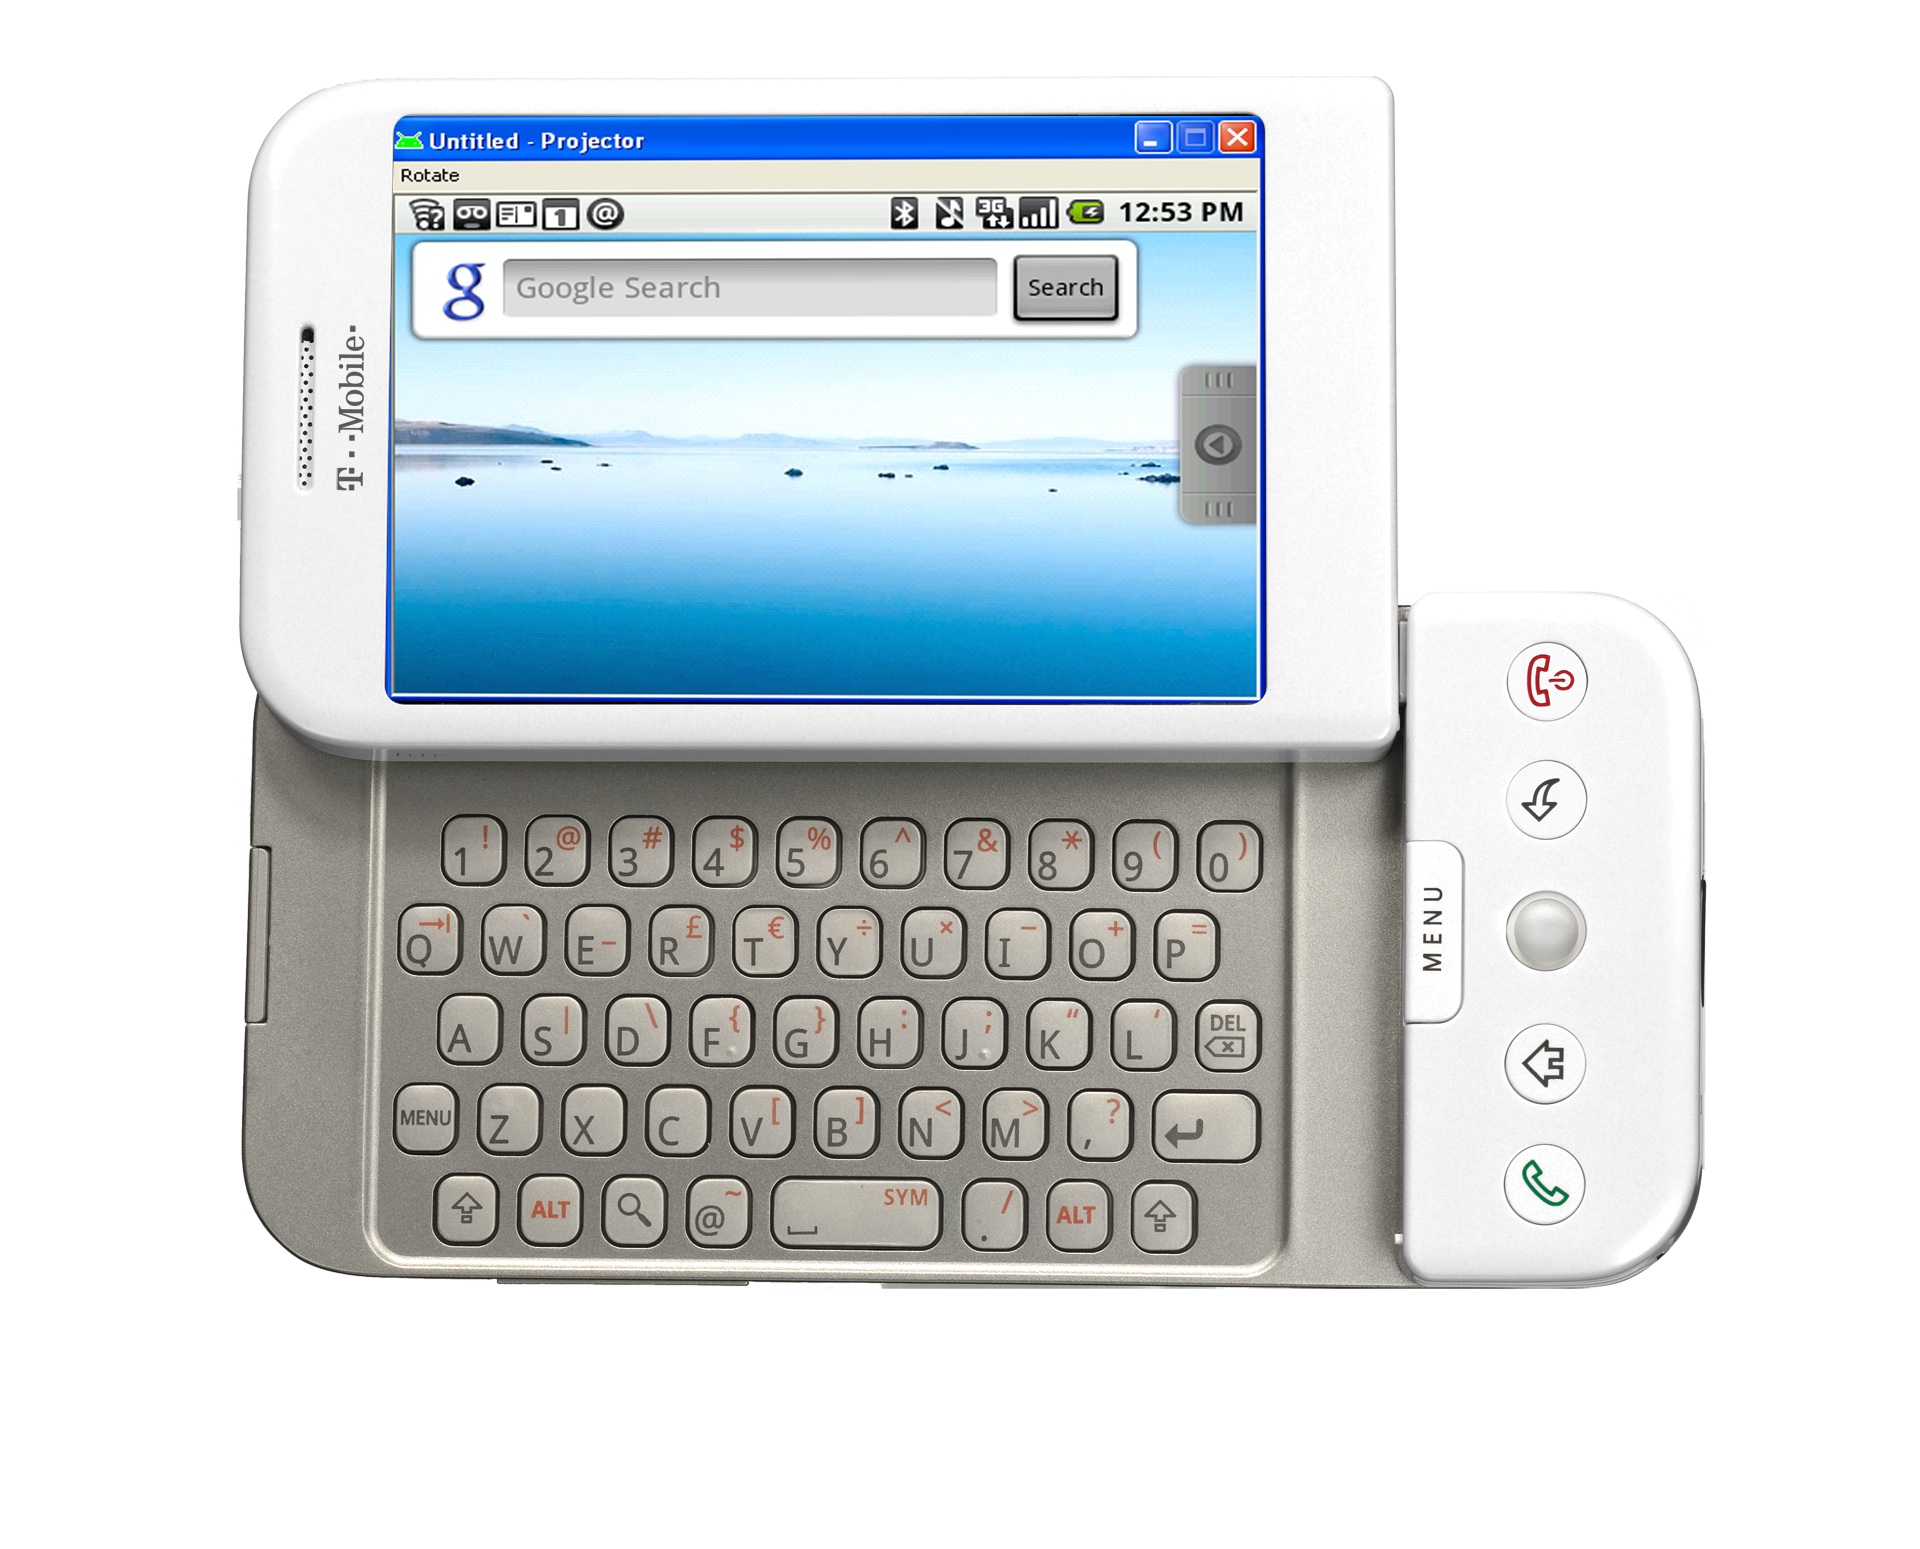 Телефоны базе android. Смартфон HTC T-mobile g1. T-mobile g1 / HTC Dream. HTC Dream (t-mobile g1) — первый смартфон на основе Android. HTC Dream 2008.